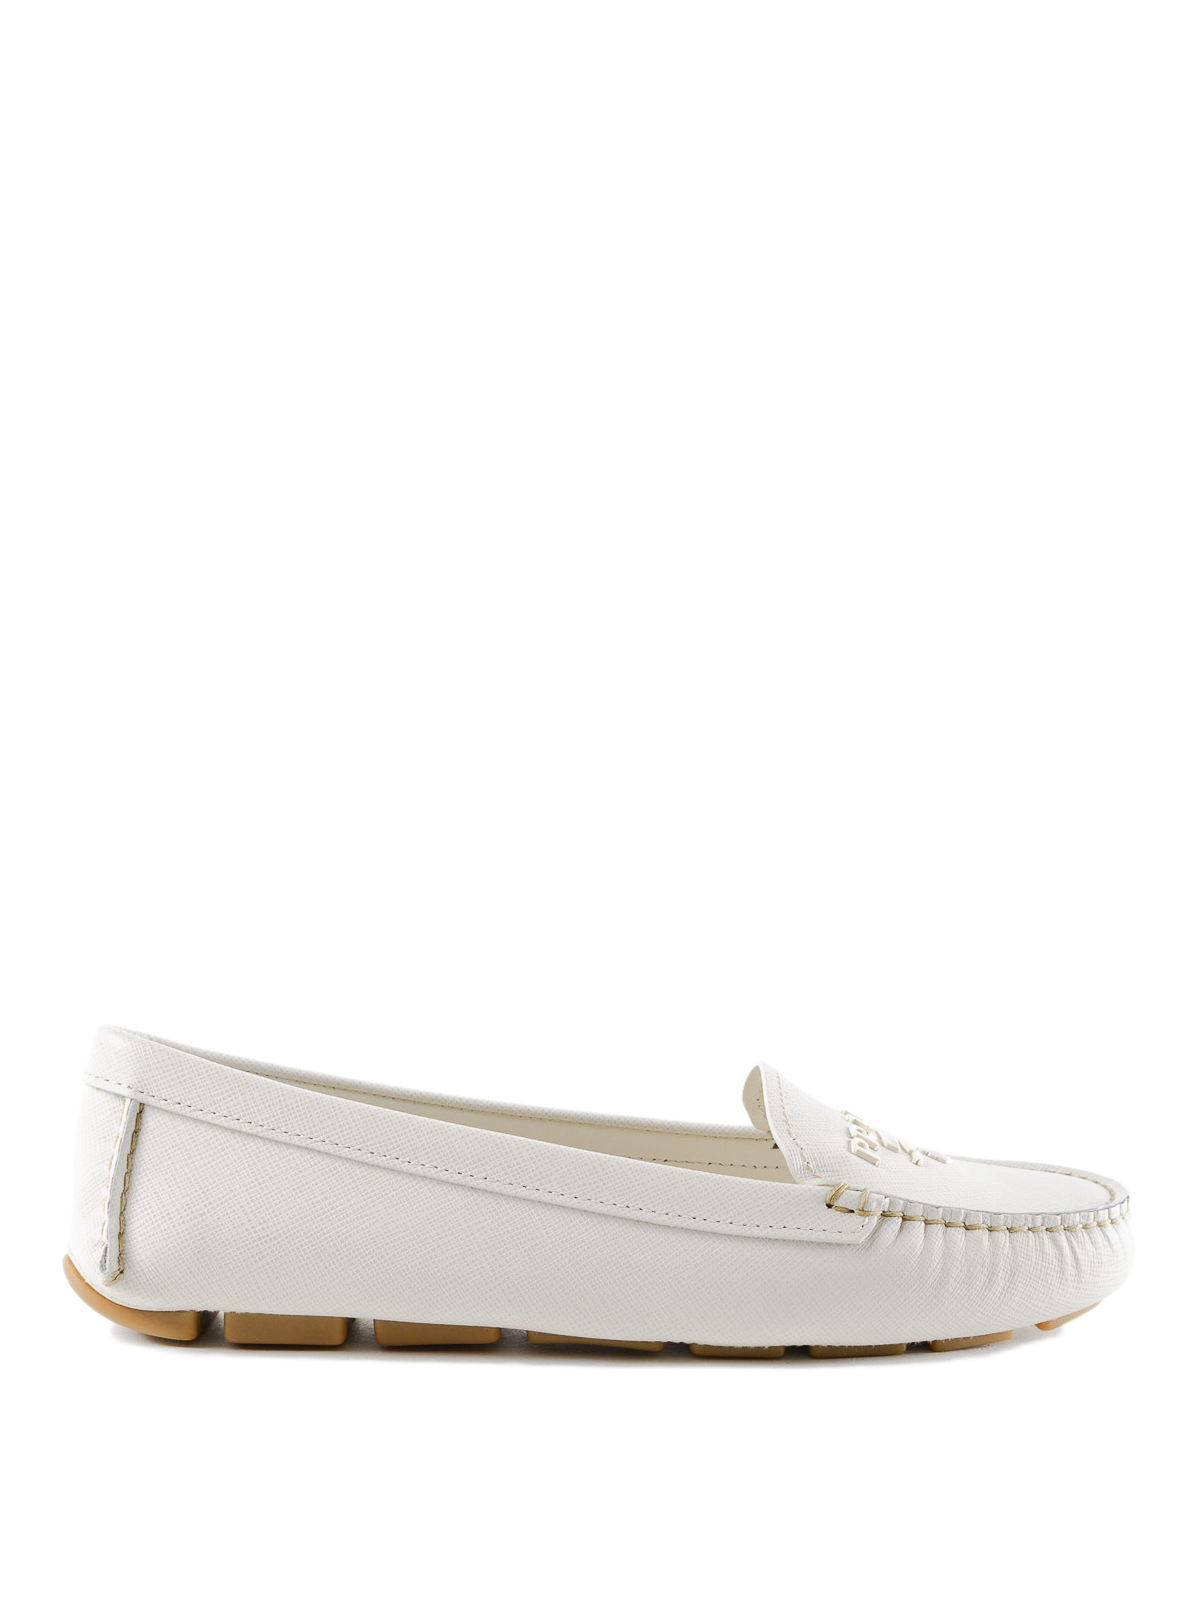 Prada - White saffiano leather loafers 